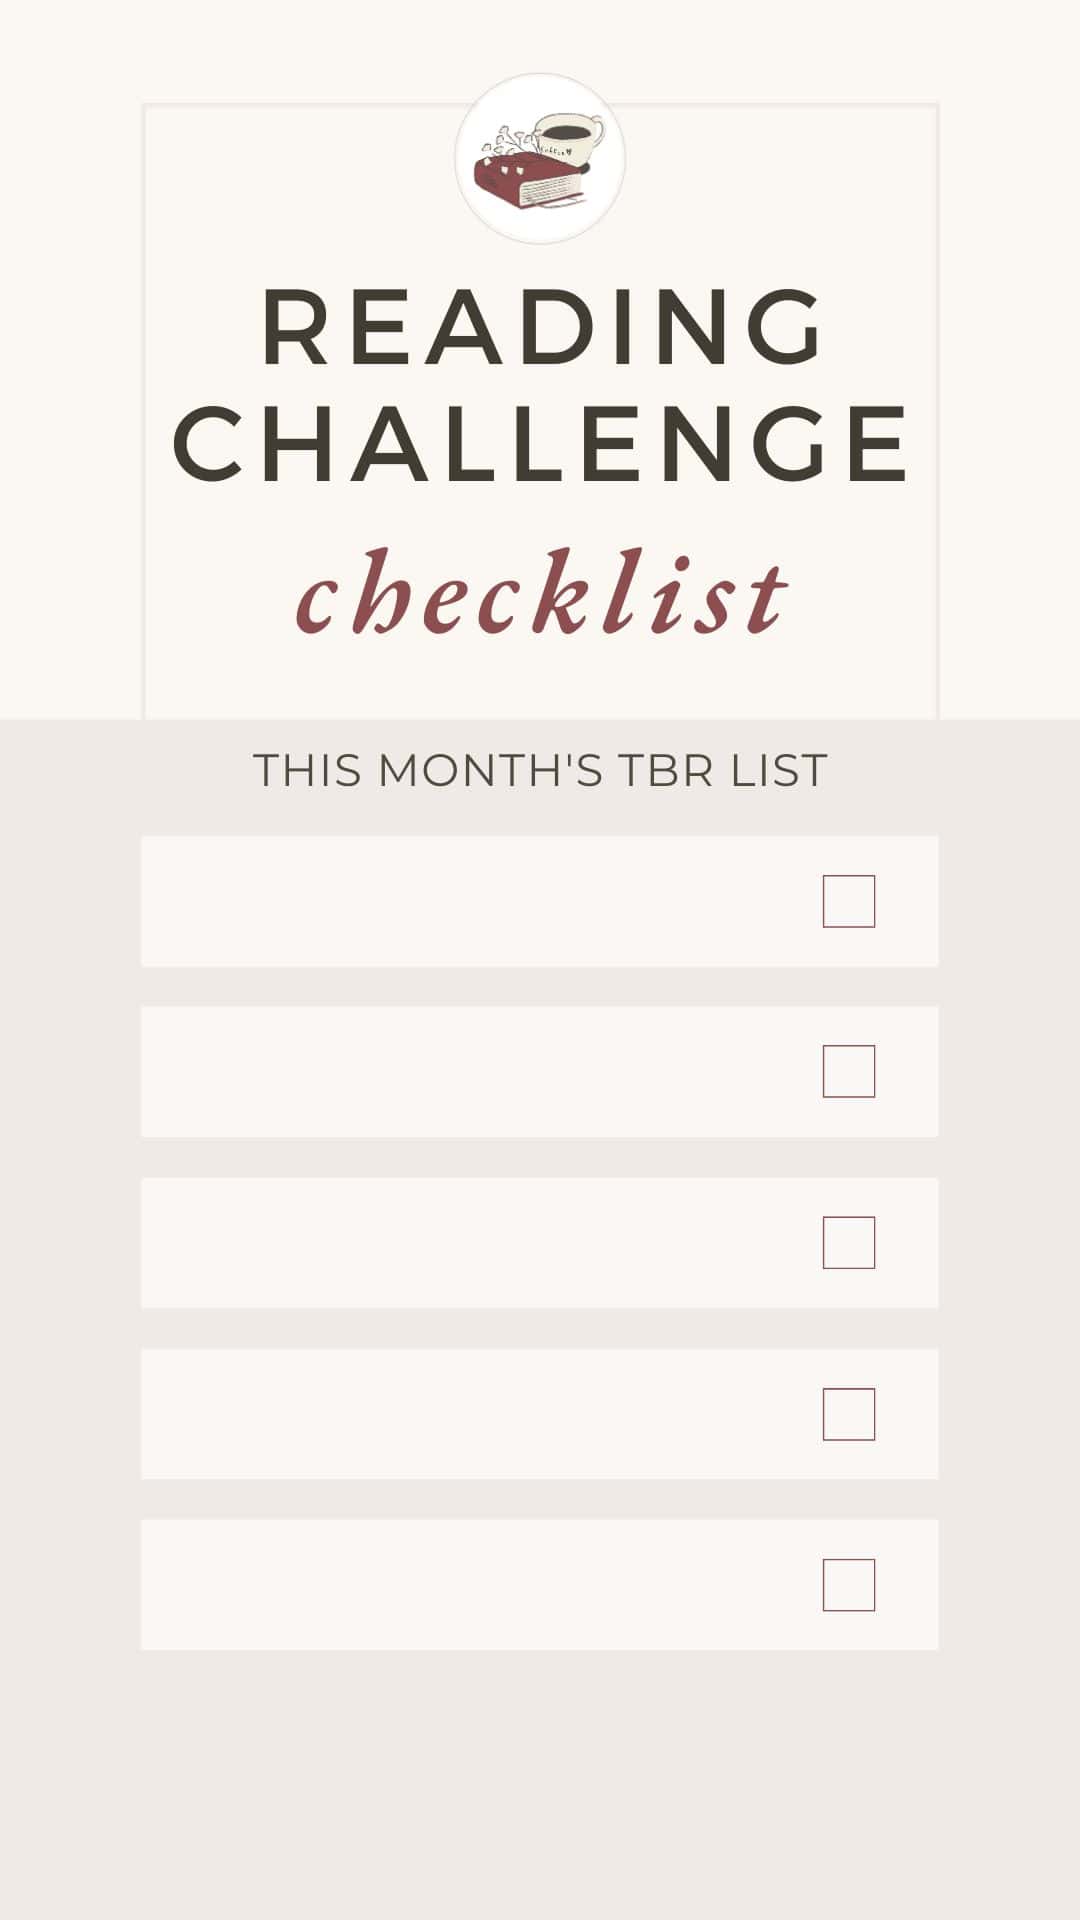 reading challenge checklist bookstagram story template.